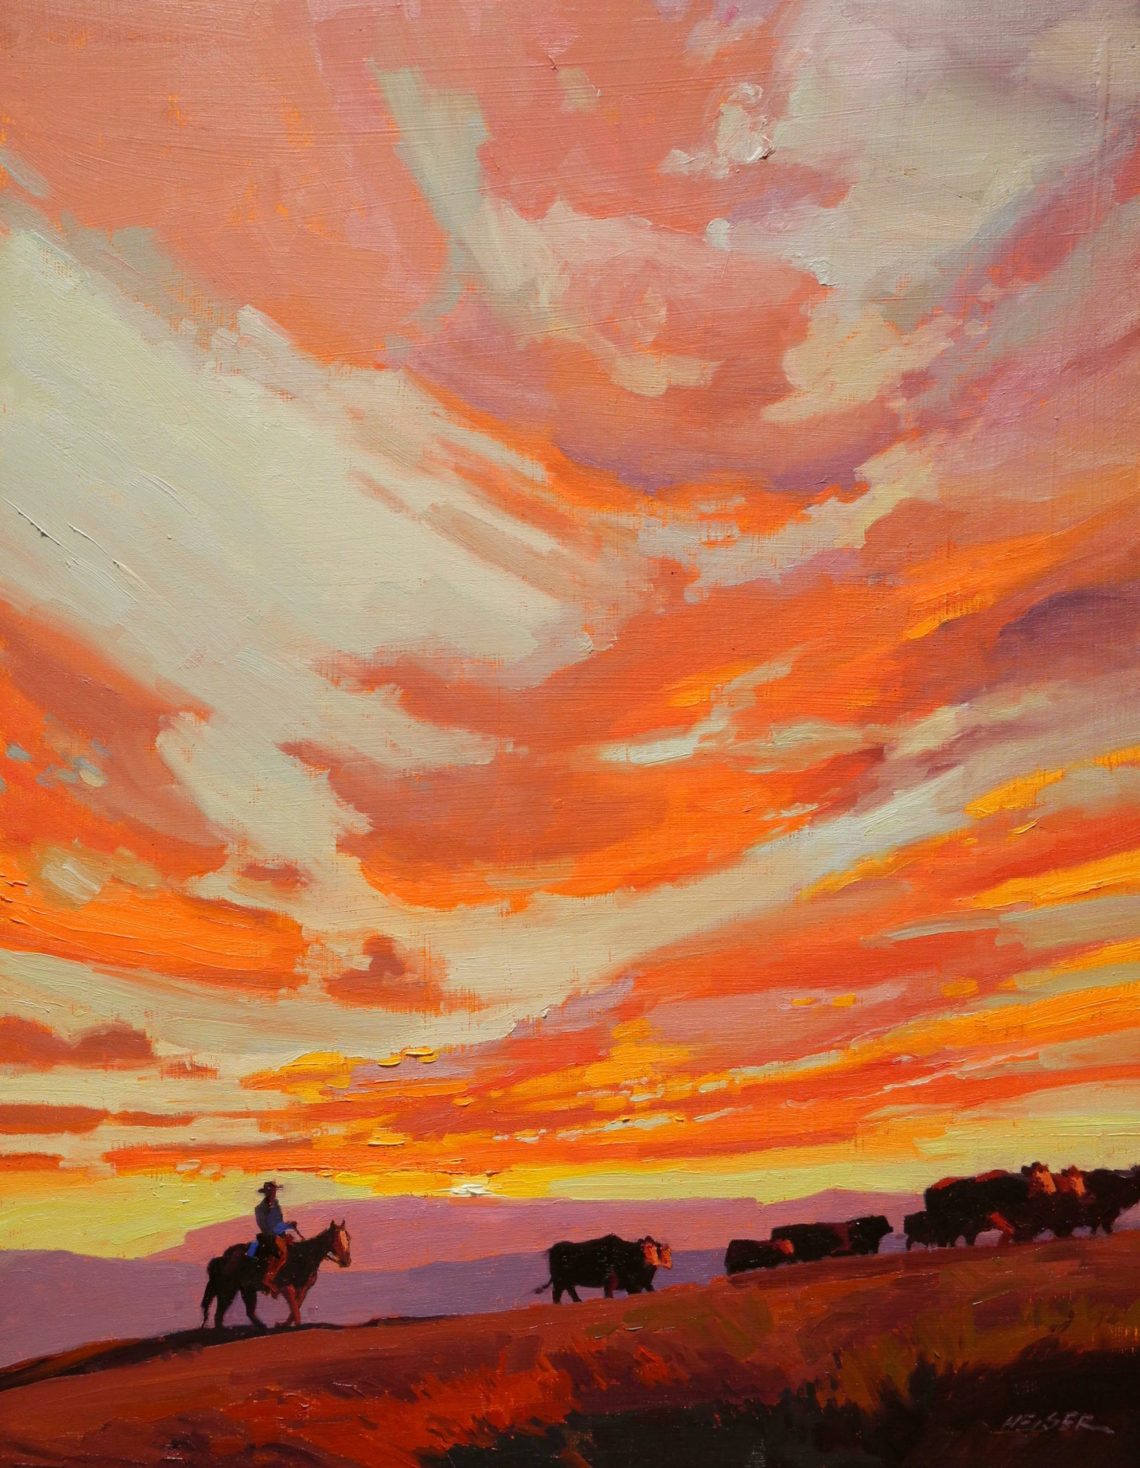 Light of Sunset, 18 x 14 - Sold